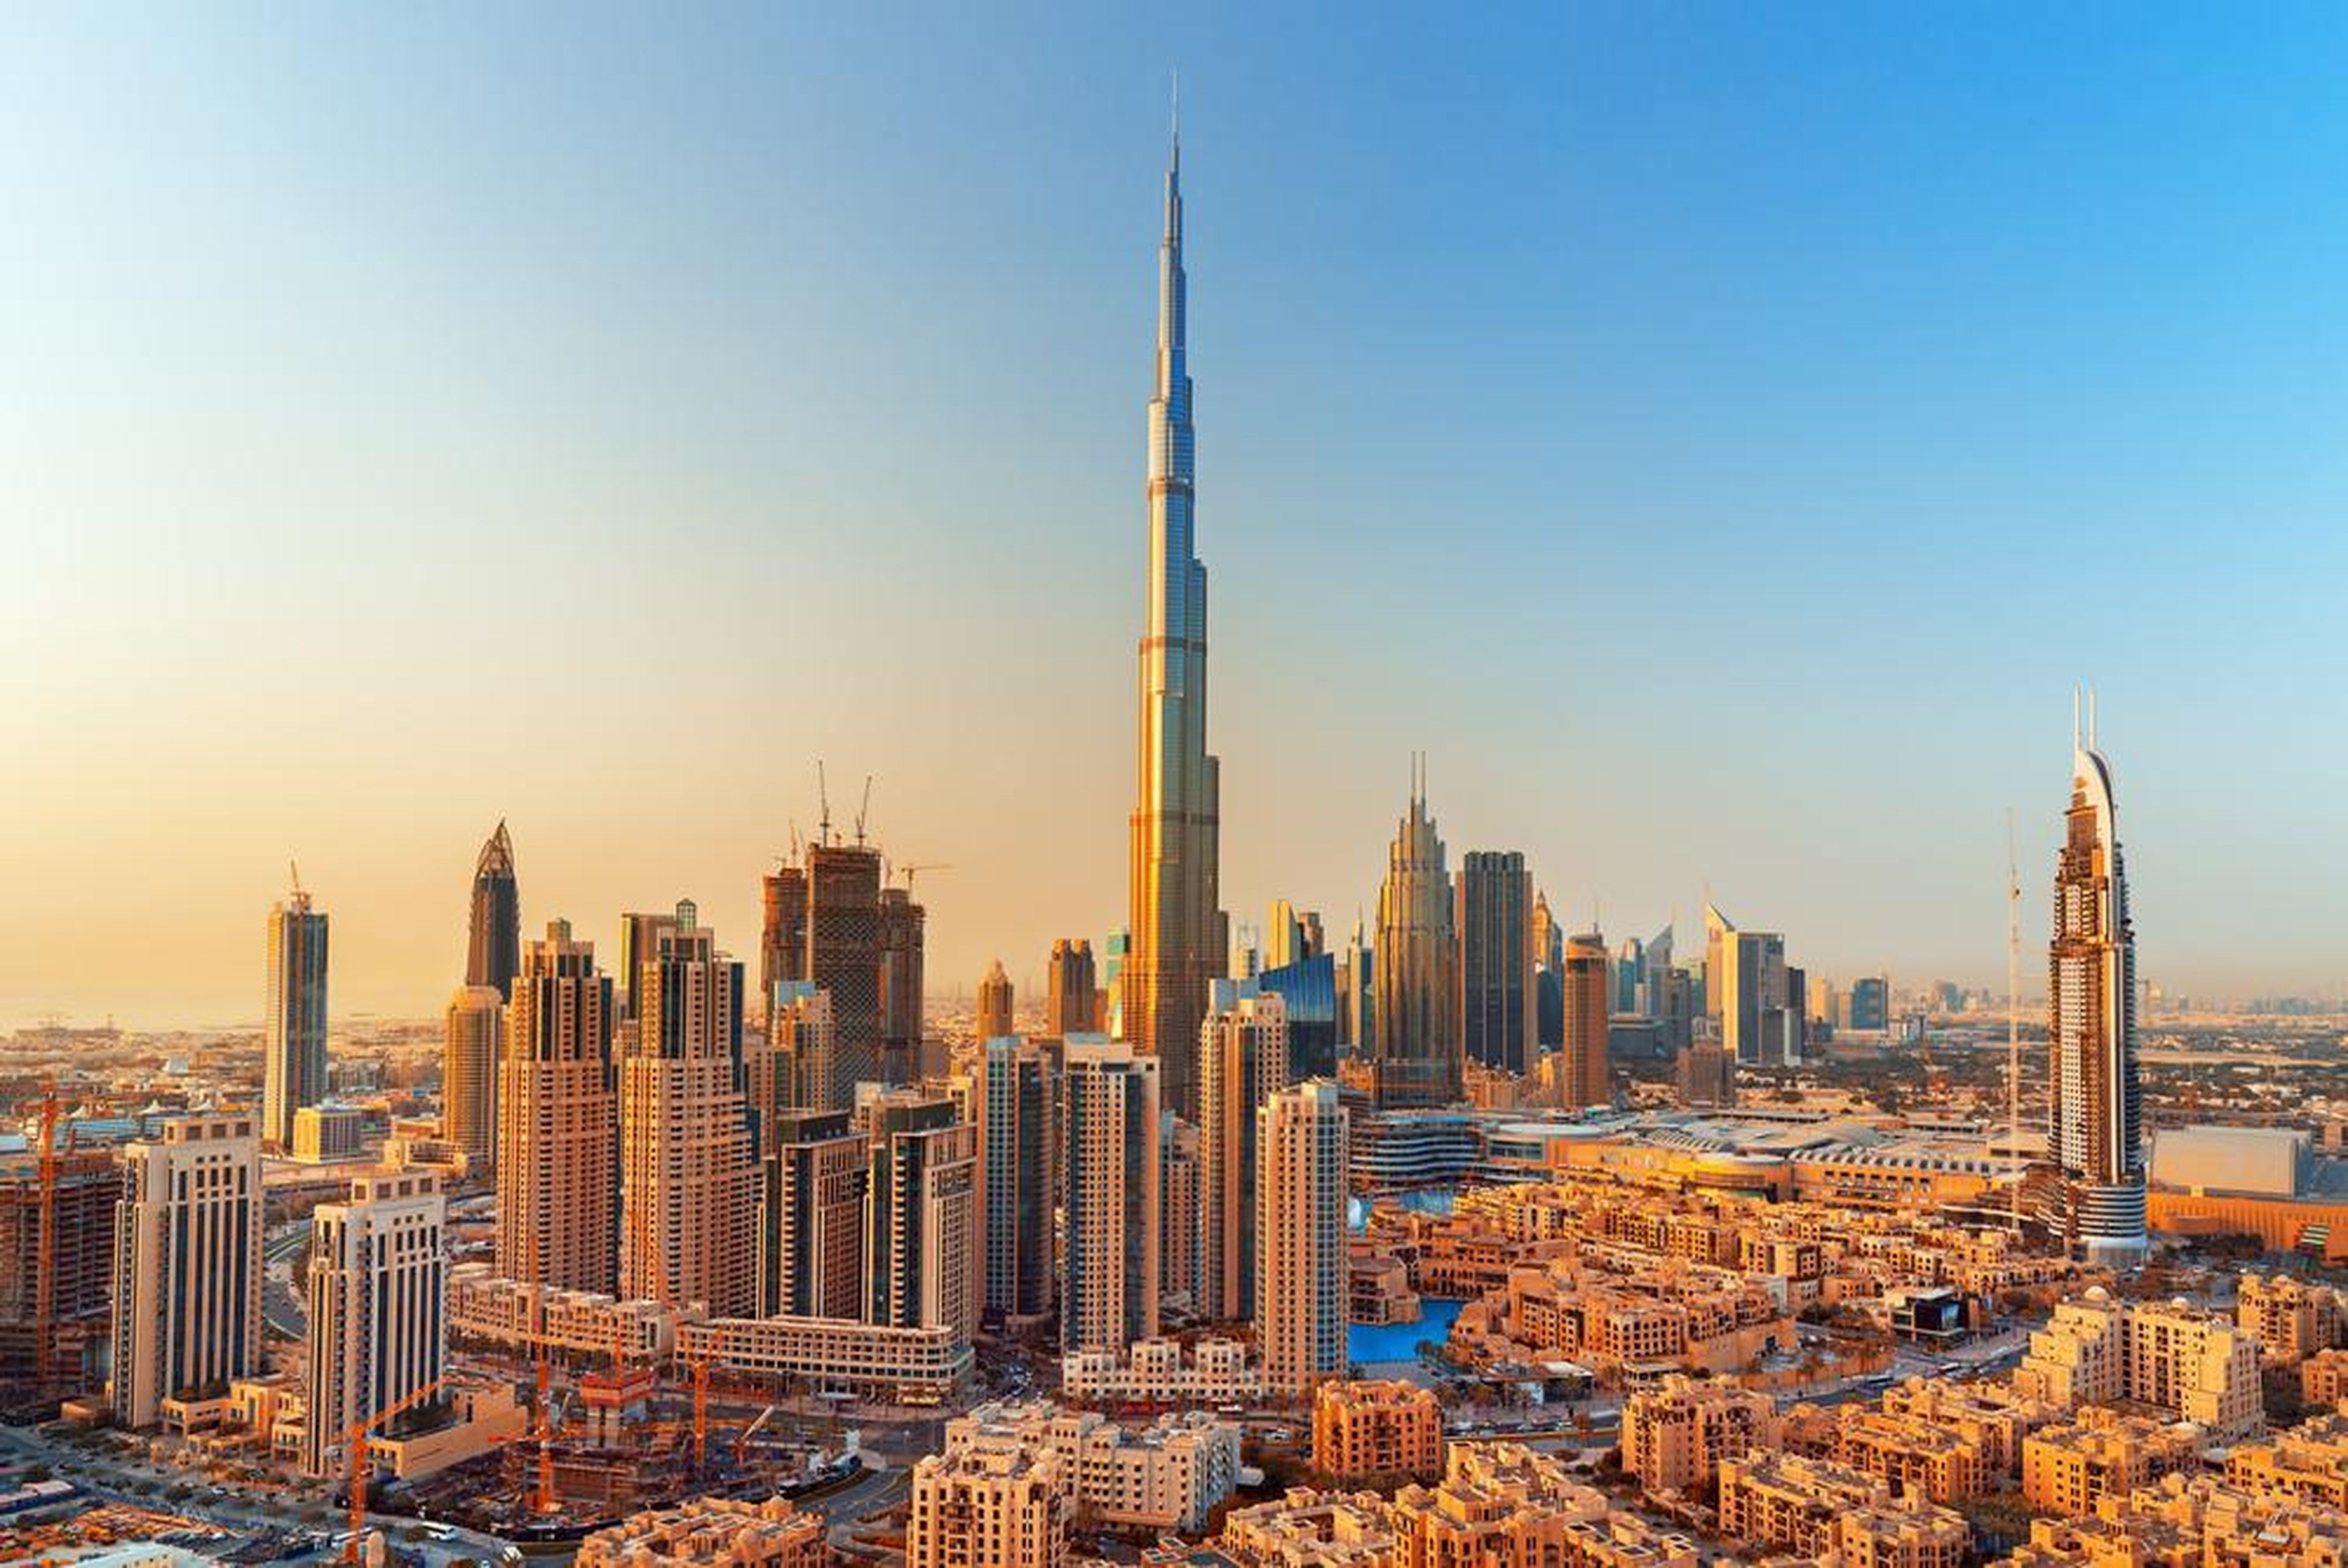 10. The United Arab Emirates